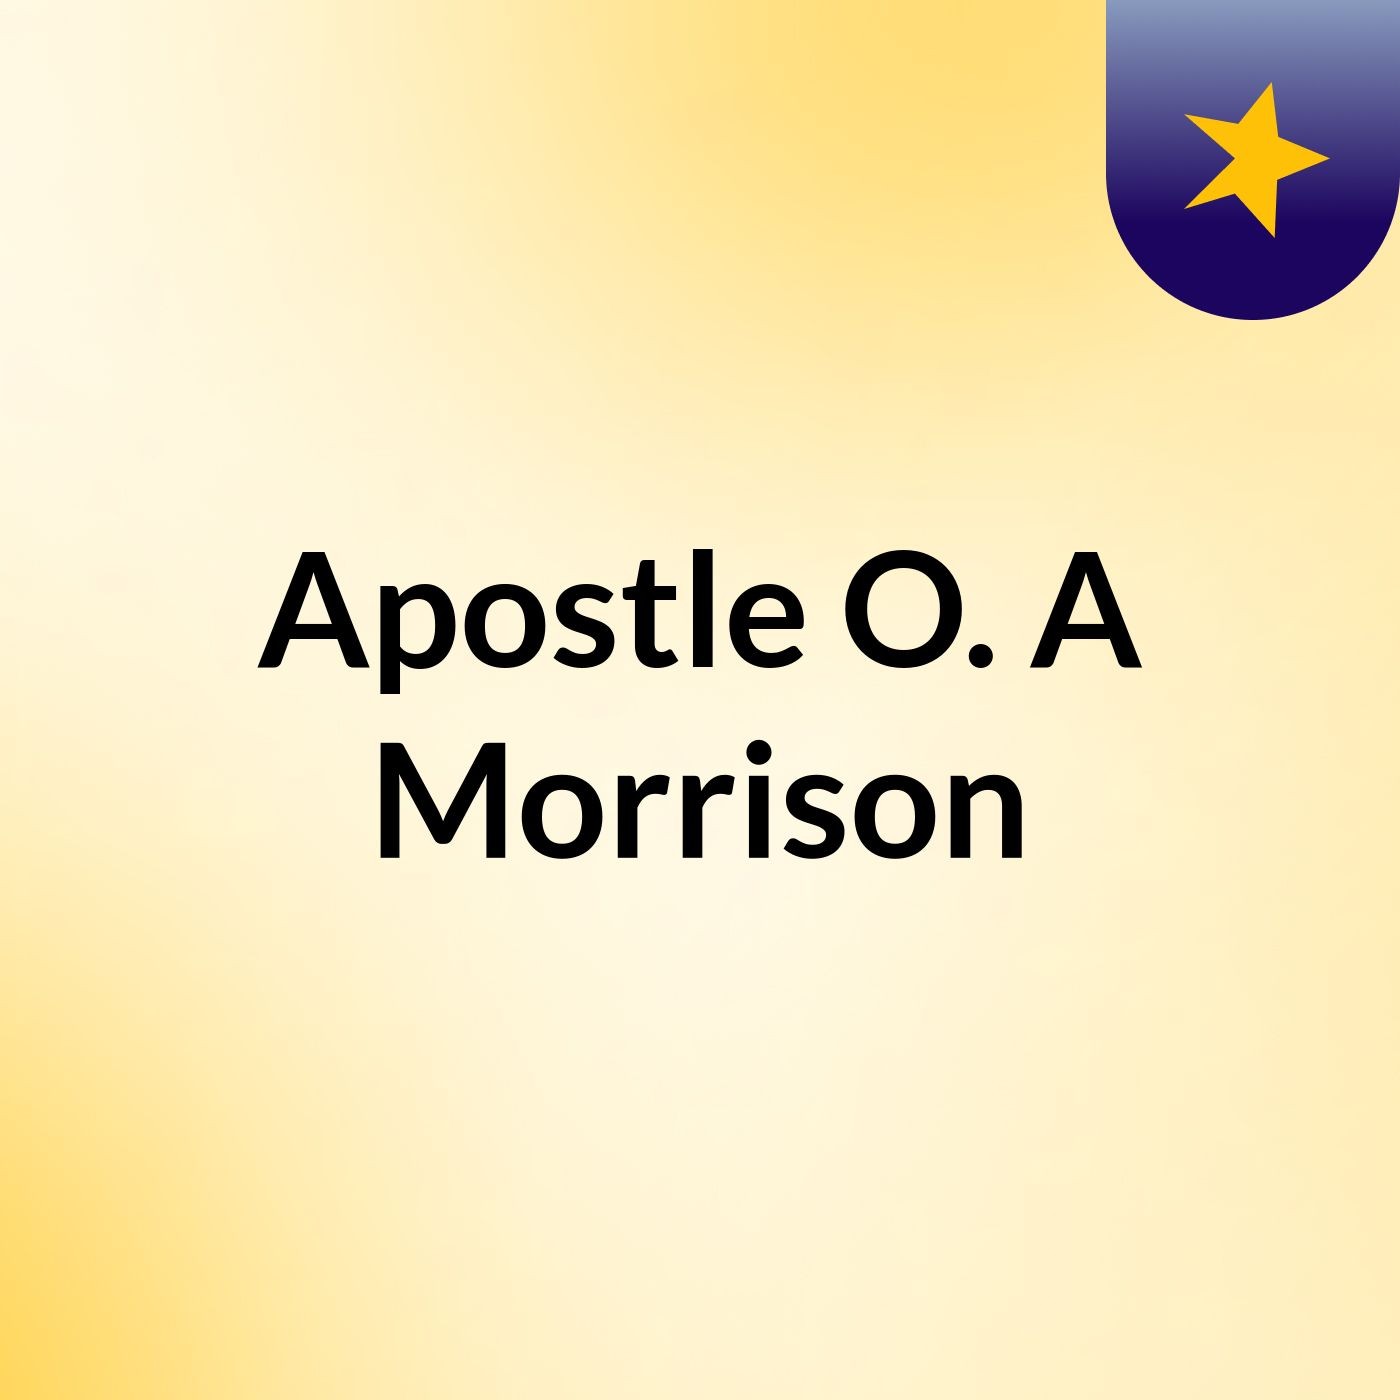 Apostle O. A Morrison